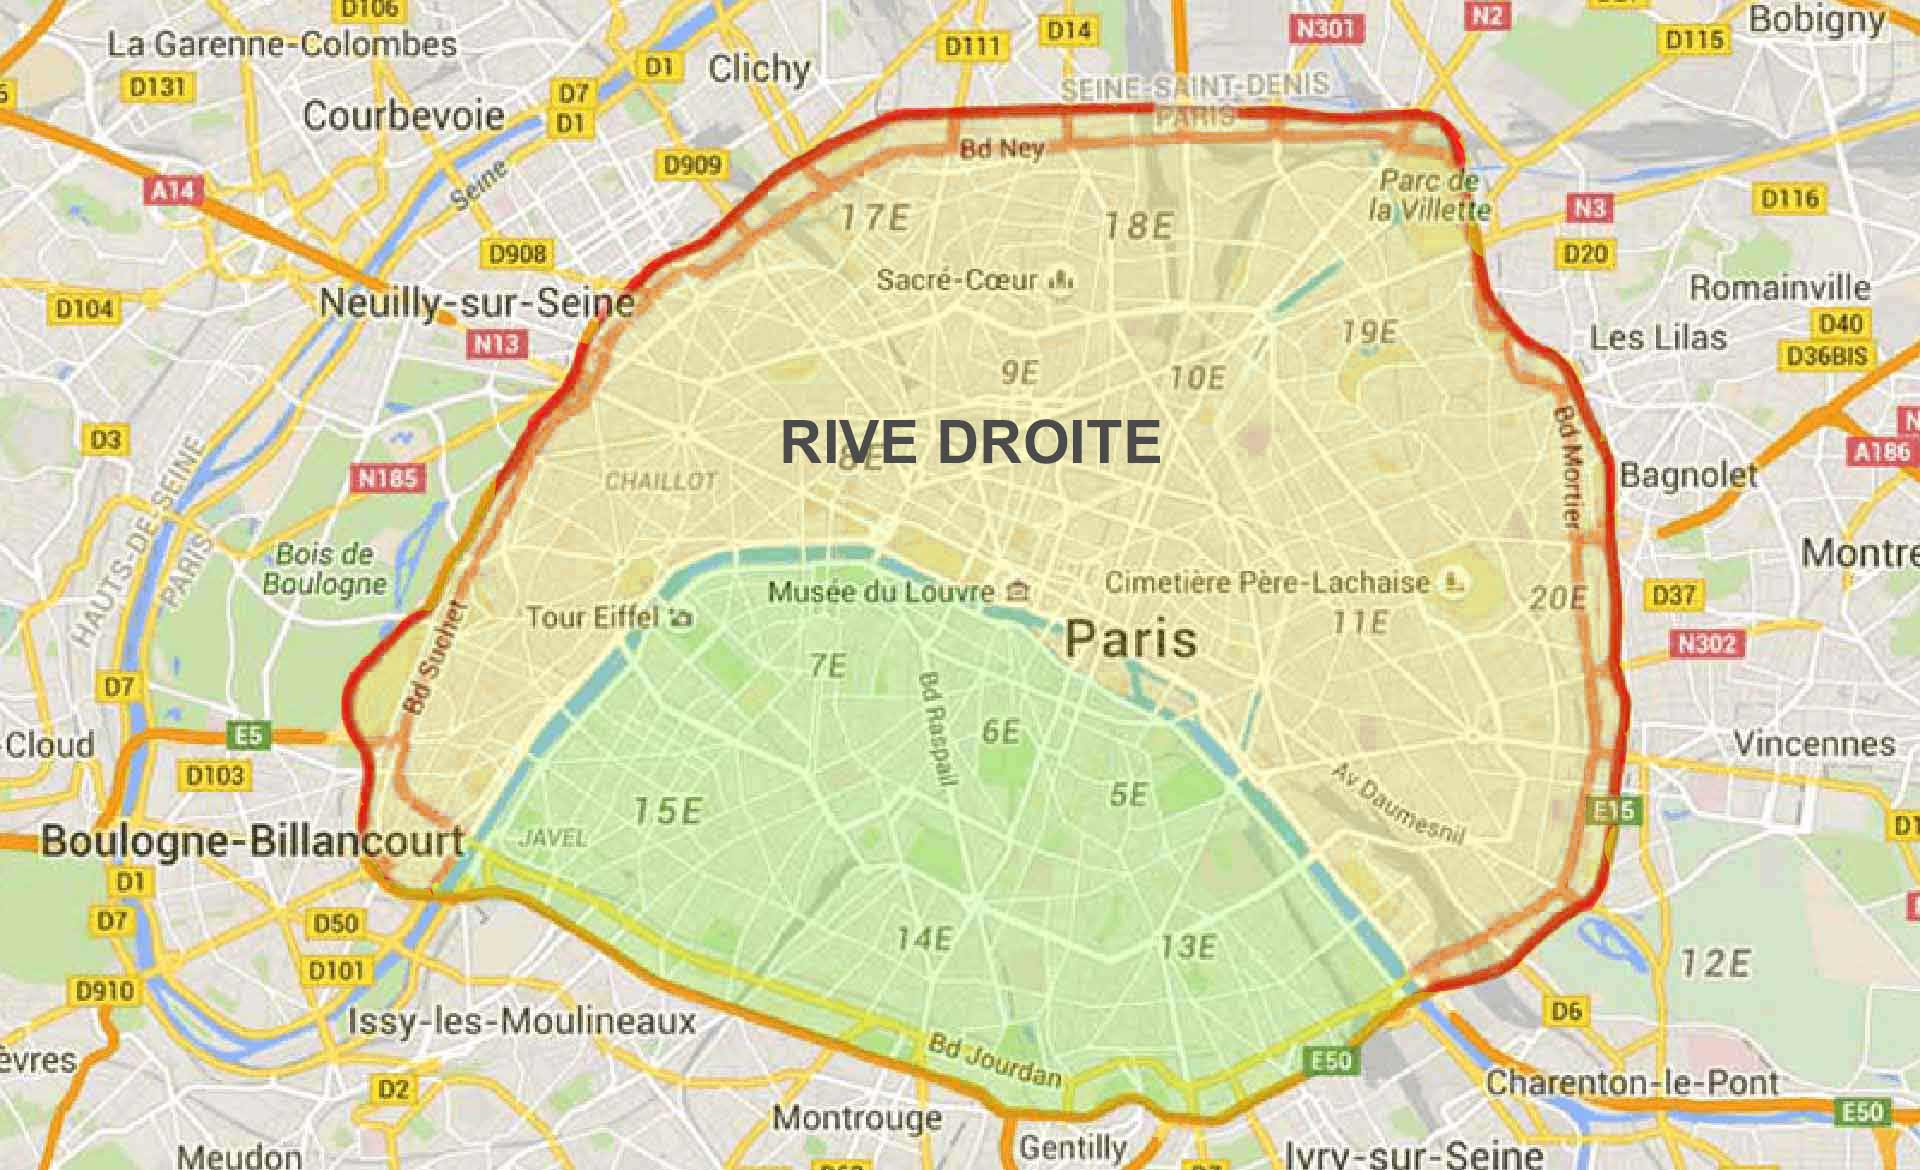 Rive Droite or Rive Gauche?